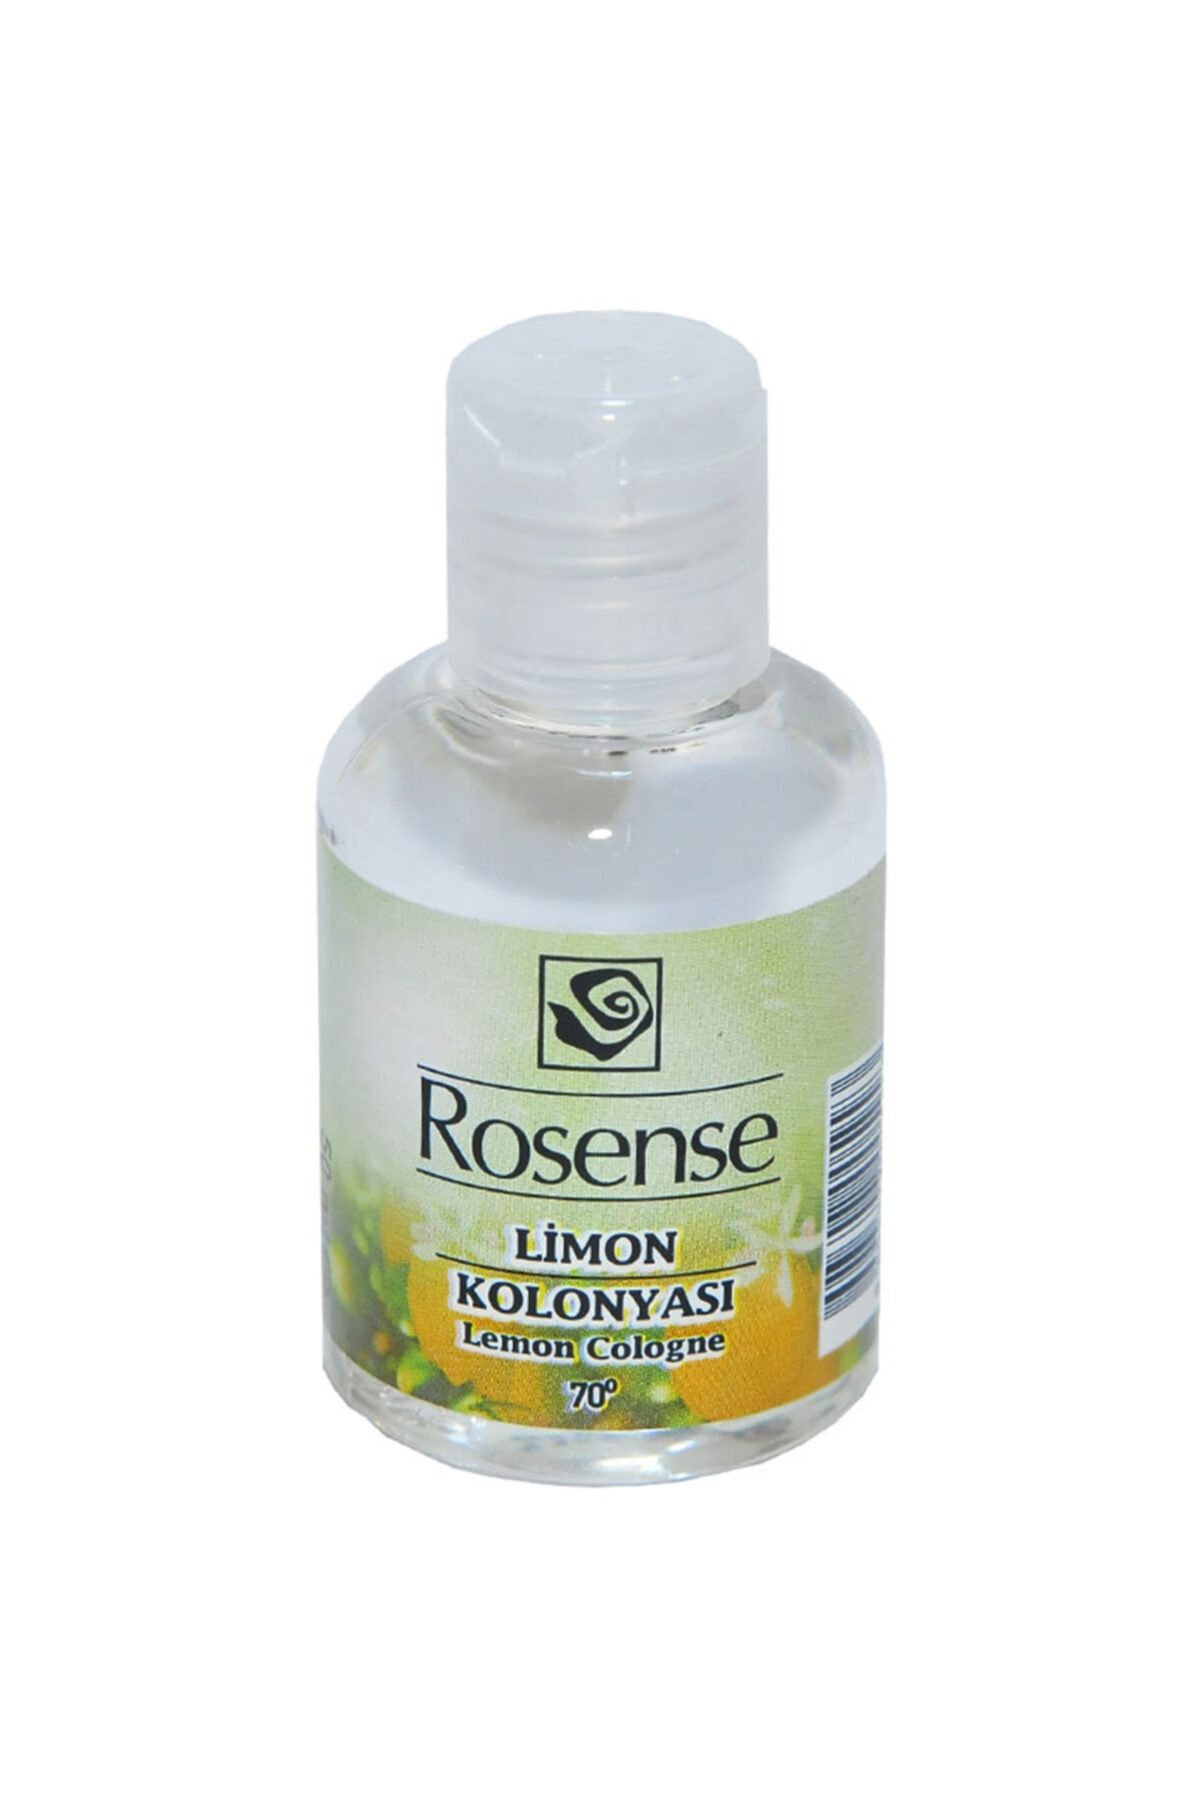 Rosense Limon Kolonyası 70 Derece 50ml Pet Şişe Lemon Cologne